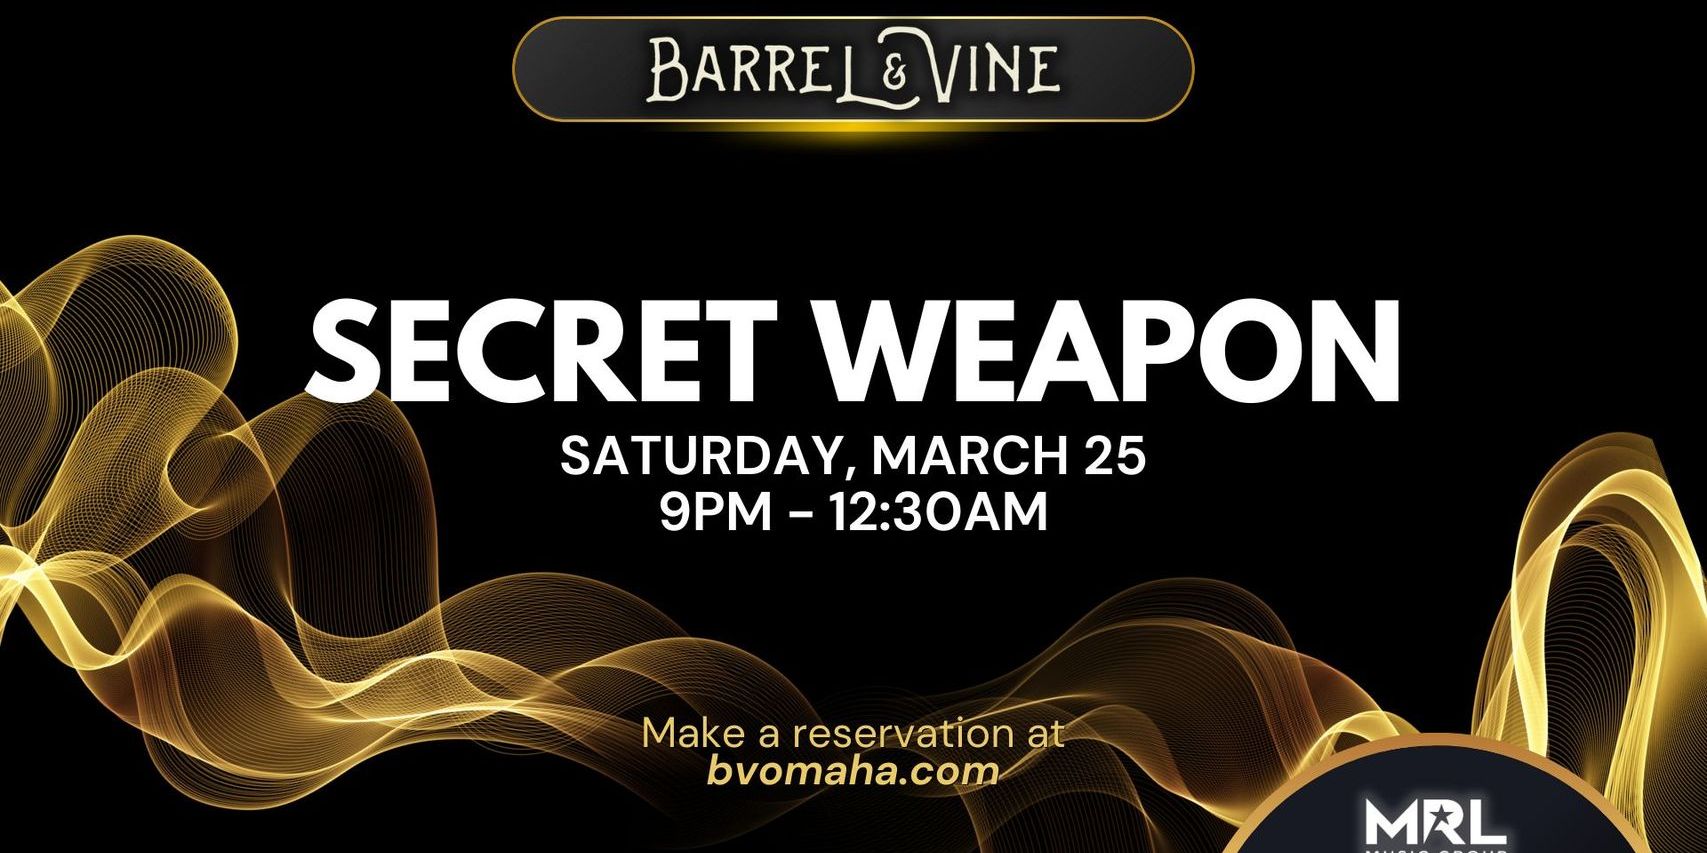 Secret Weapon | Saturday, March 25 | Live Music at Barrel & Vine promotional image